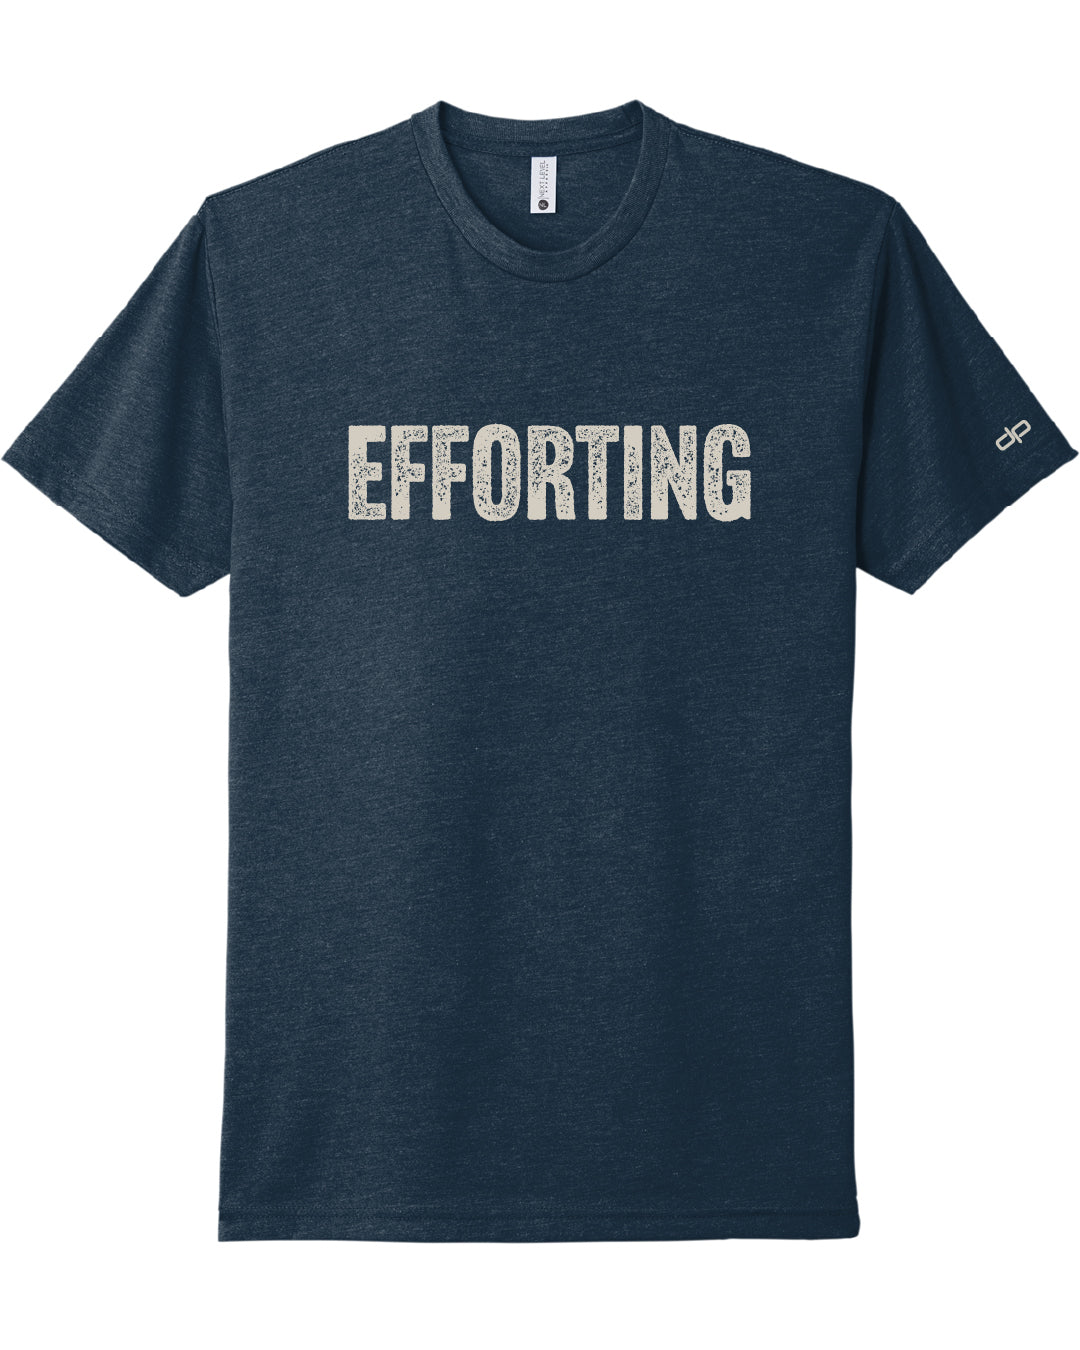 Efforting T-Shirt